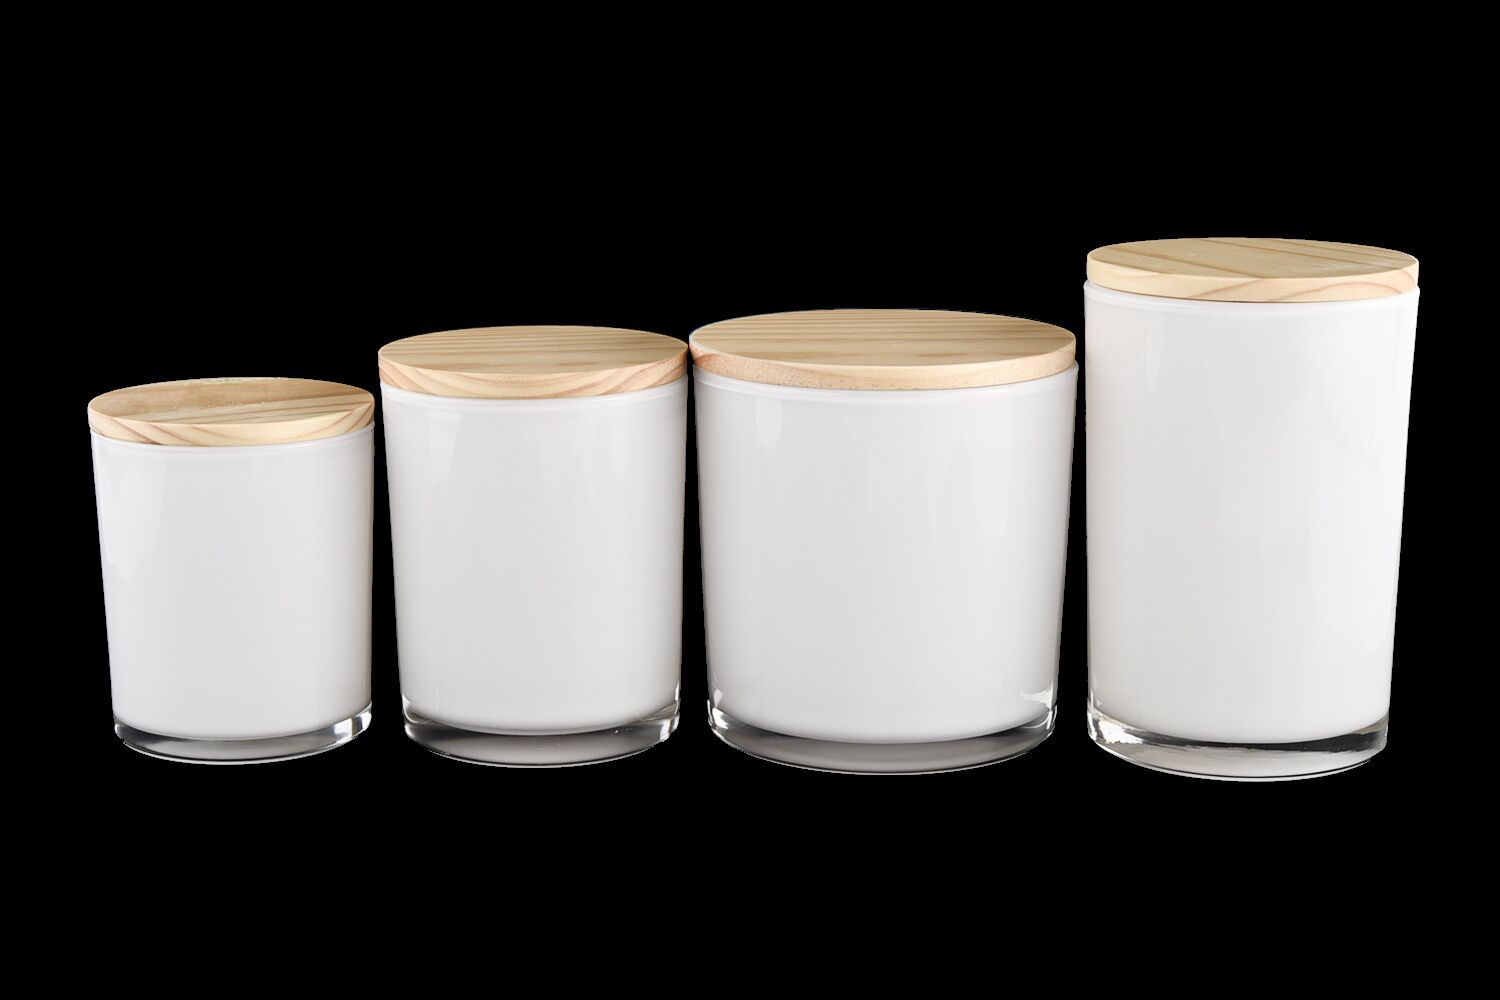 2oz-20oz customized color glass candle jar in bulk - COPY - 6gmrfj